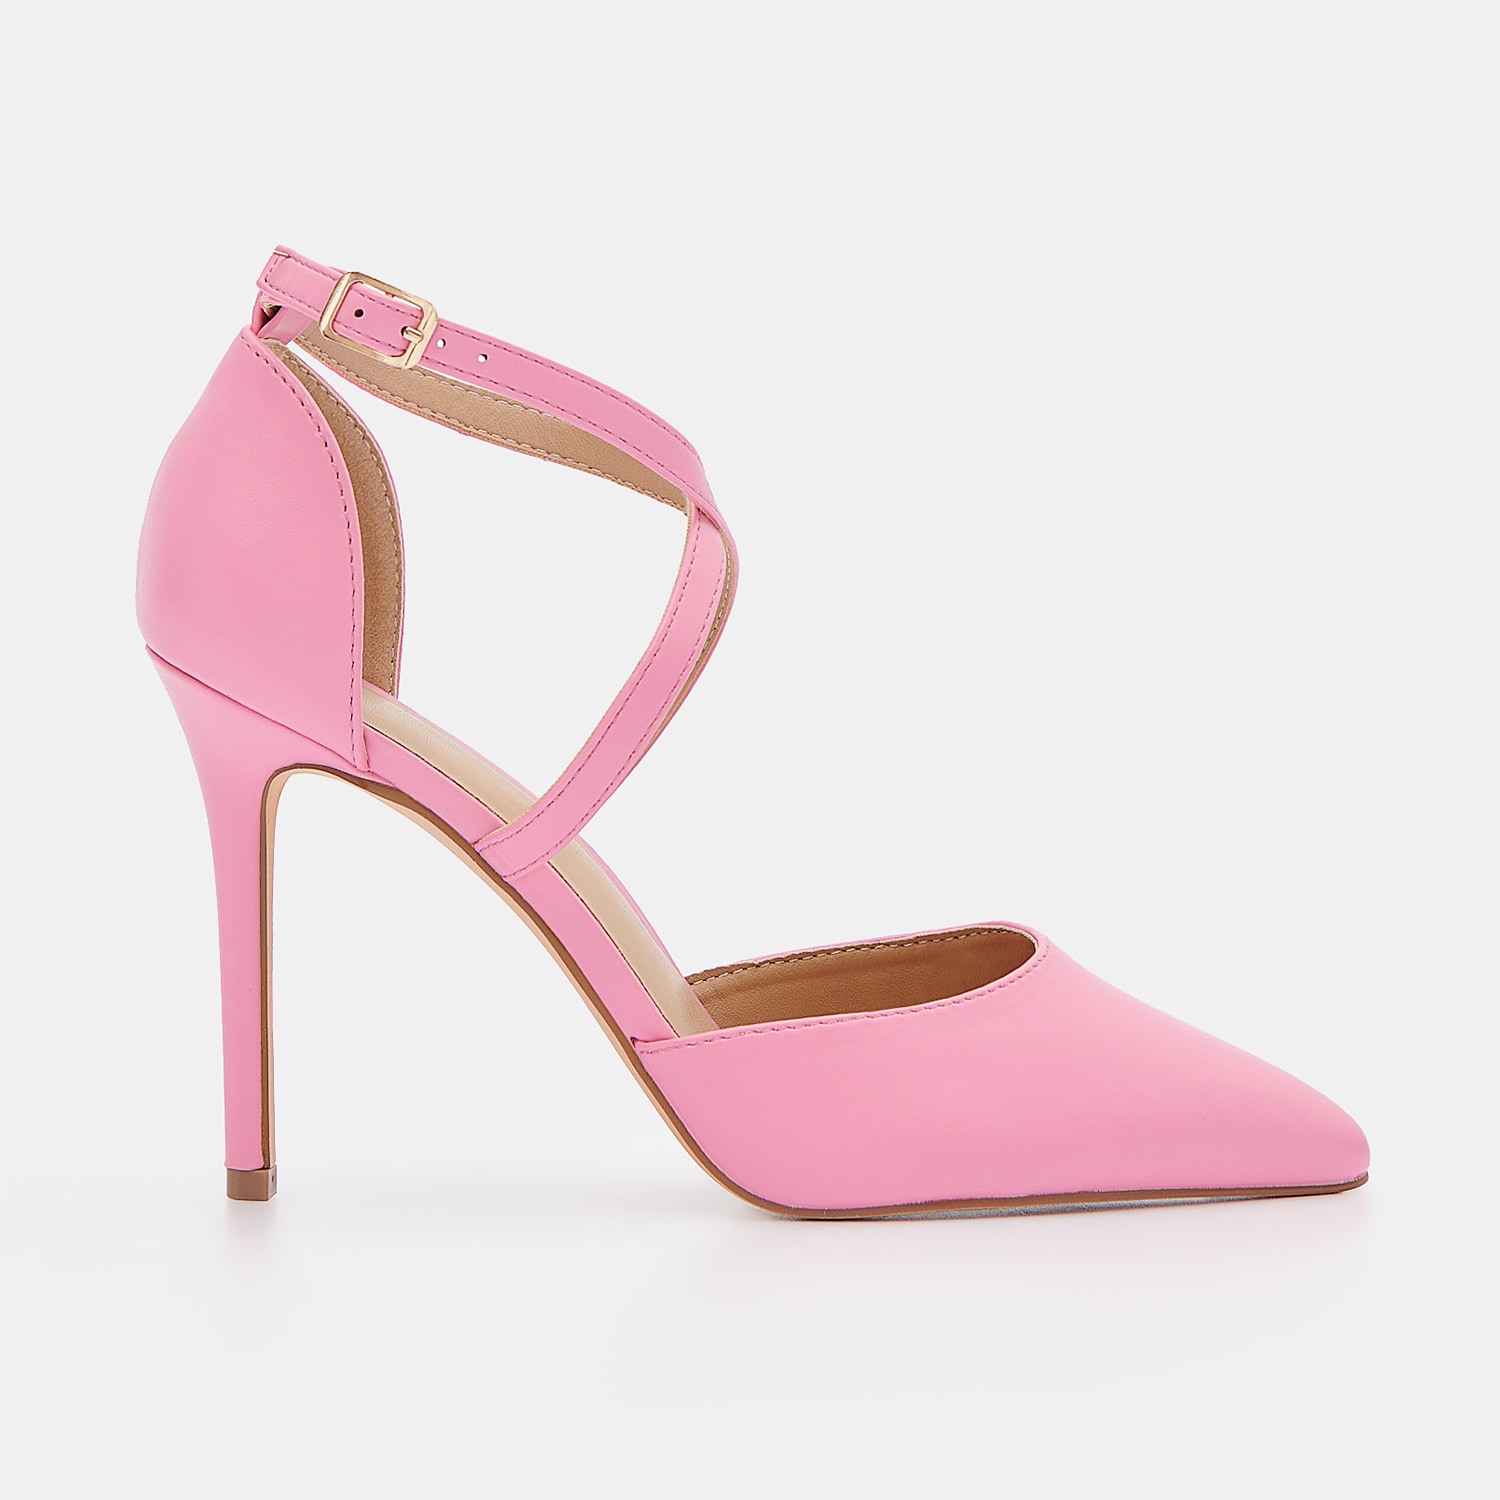 Mohito - Pantofi roz cu tocuri stiletto - Roz image15